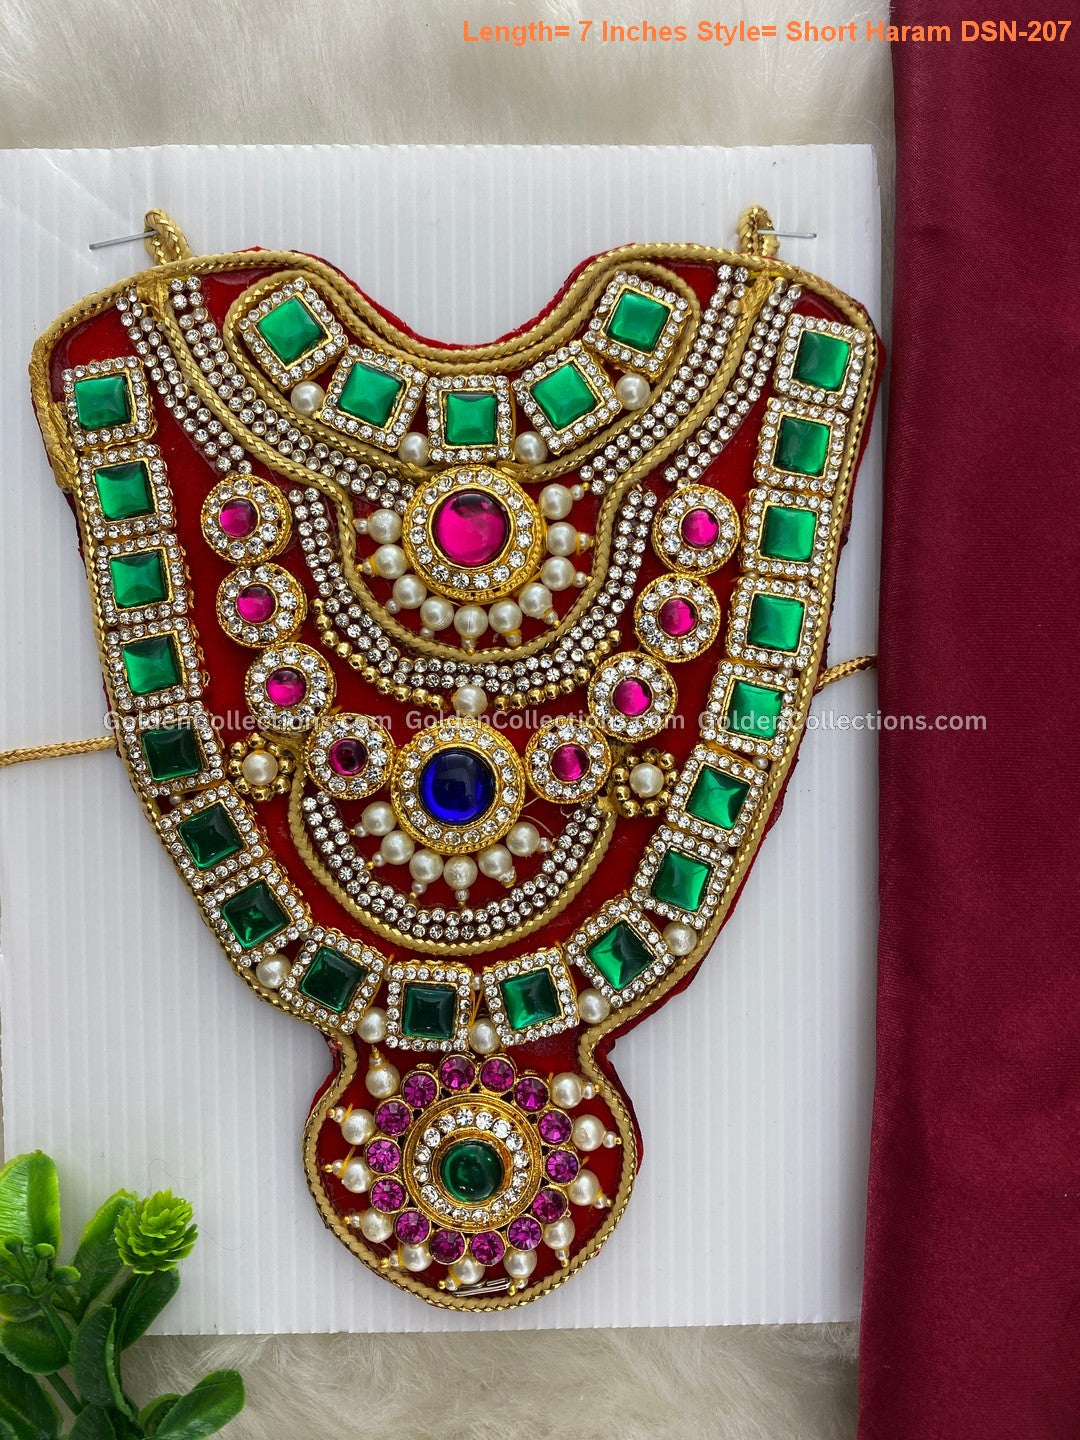 Ammavaru Short Necklace - Divine Elegance Collection - DSN-207